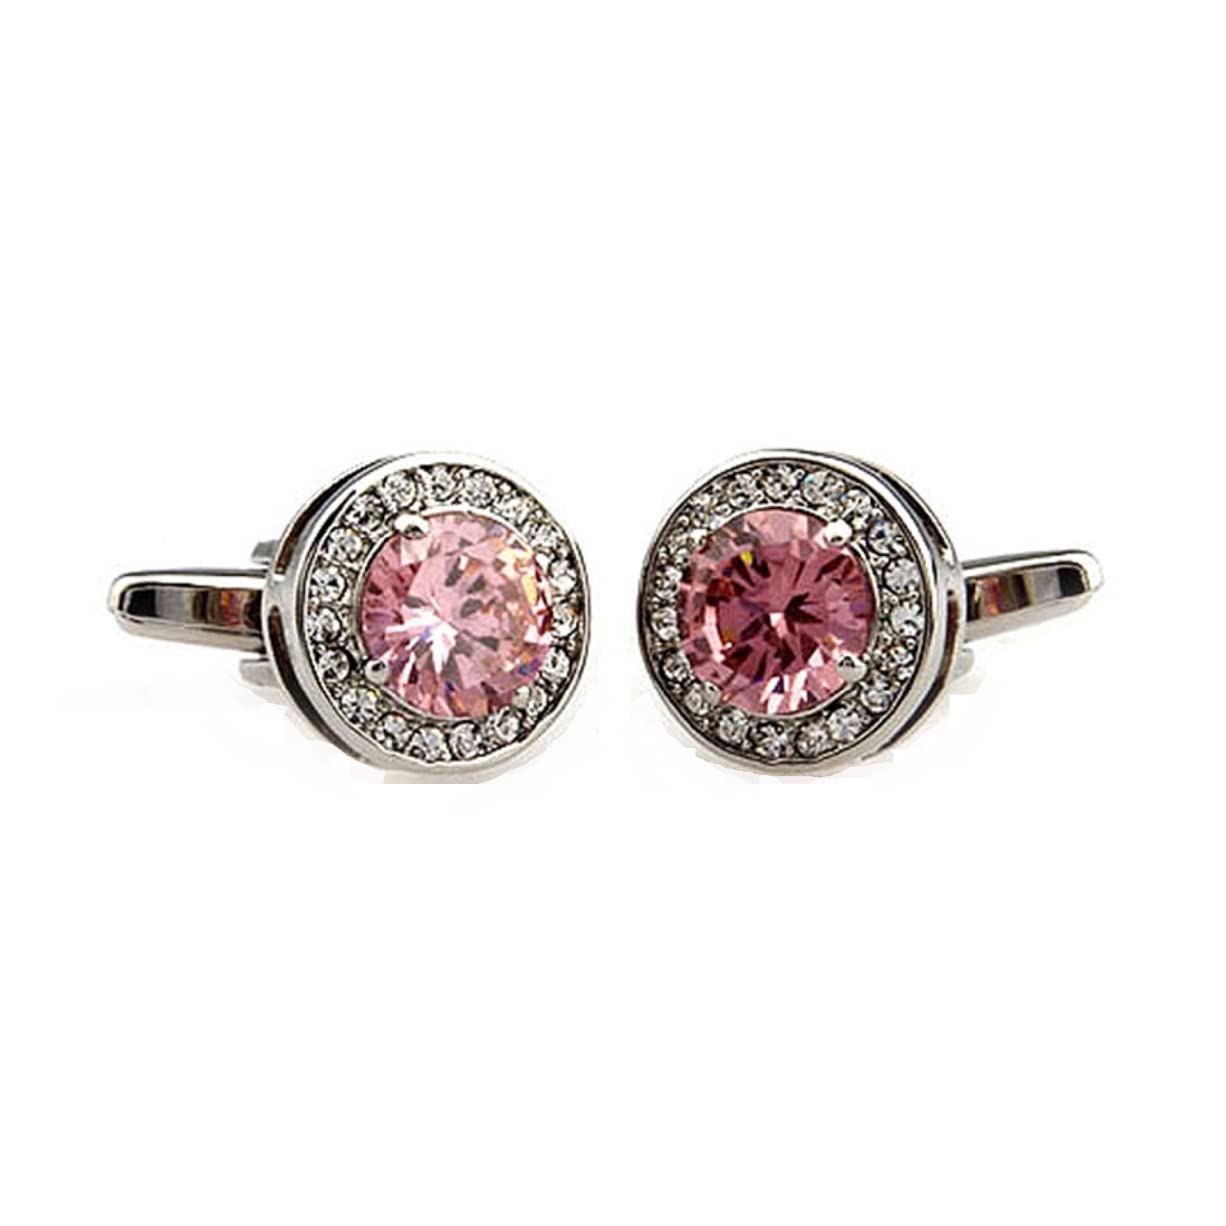 MRCUFF Pink Crystal Round Clear Accents Pair Cufflinks in a Presentation Gift Box & Polishing Cloth